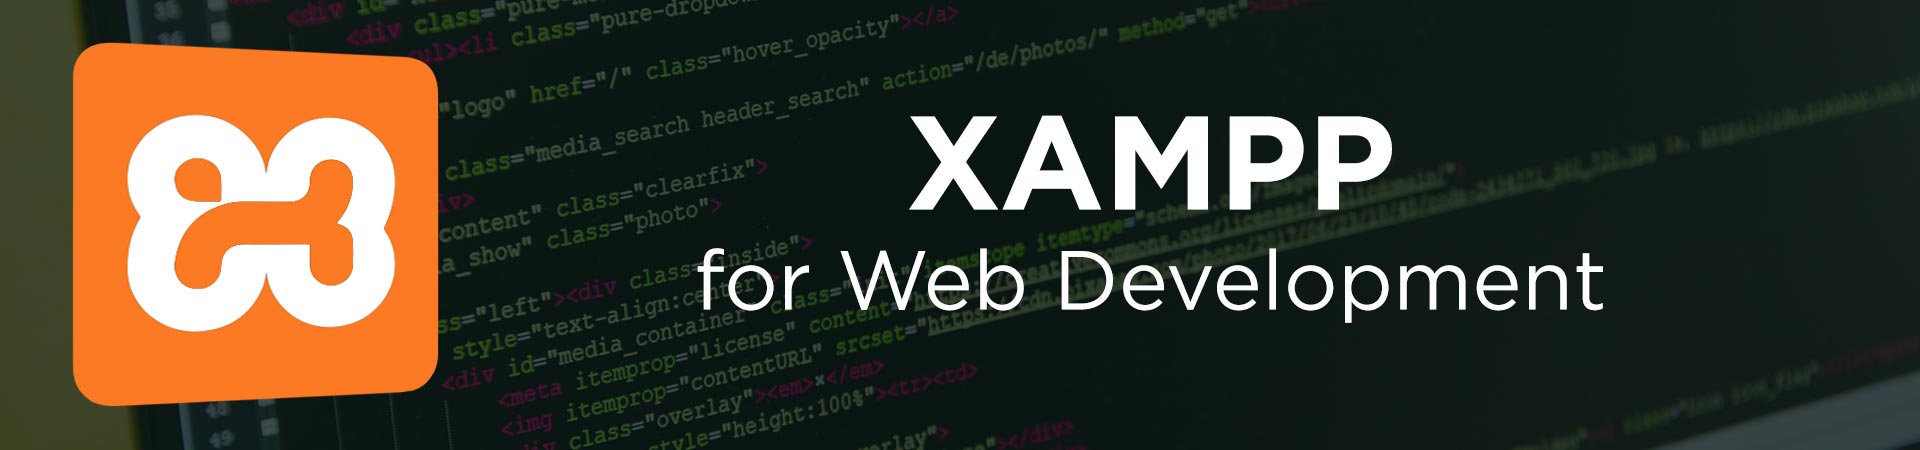 XAMPP for Web Development